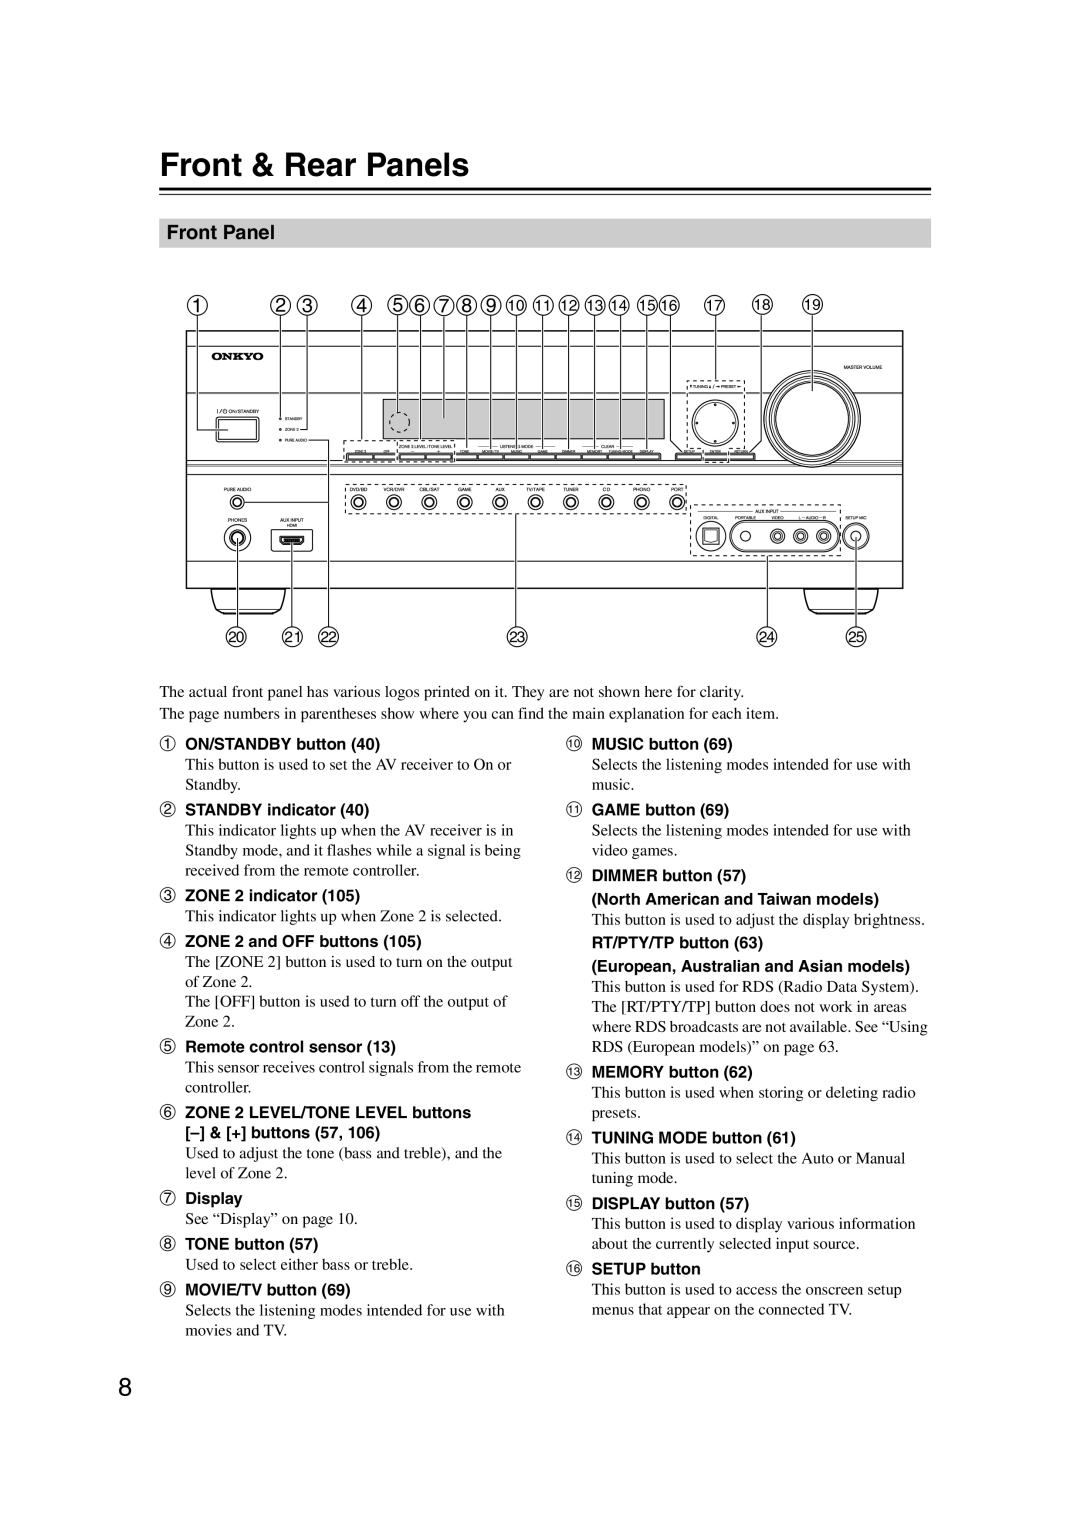 Onkyo TX-SR707 instruction manual Front & Rear Panels 